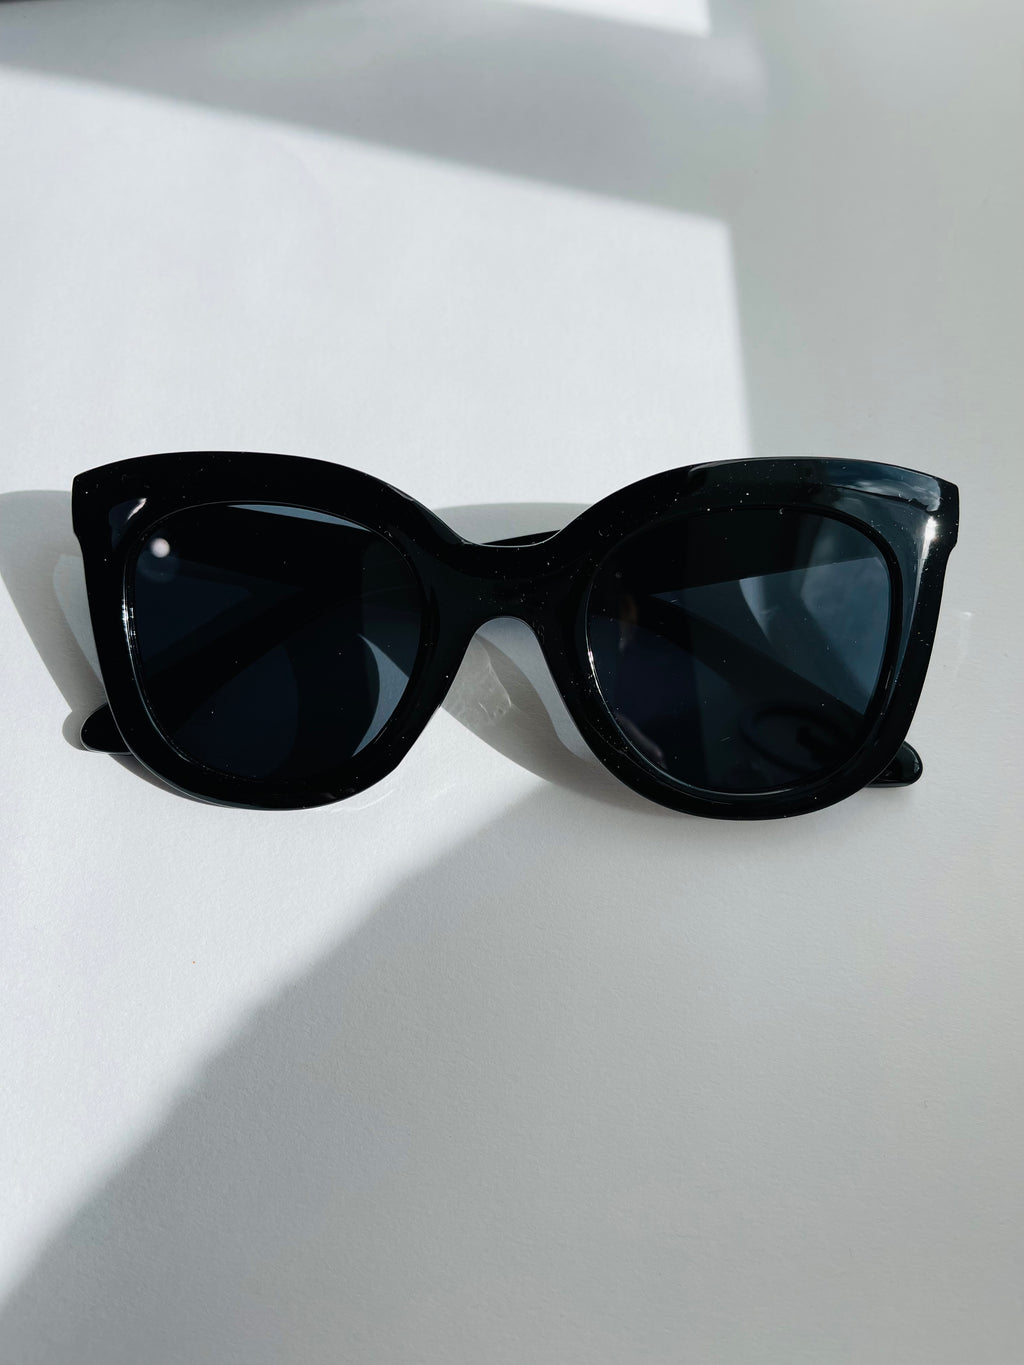 Audrey Hepburn Sunglasses – Abdosy